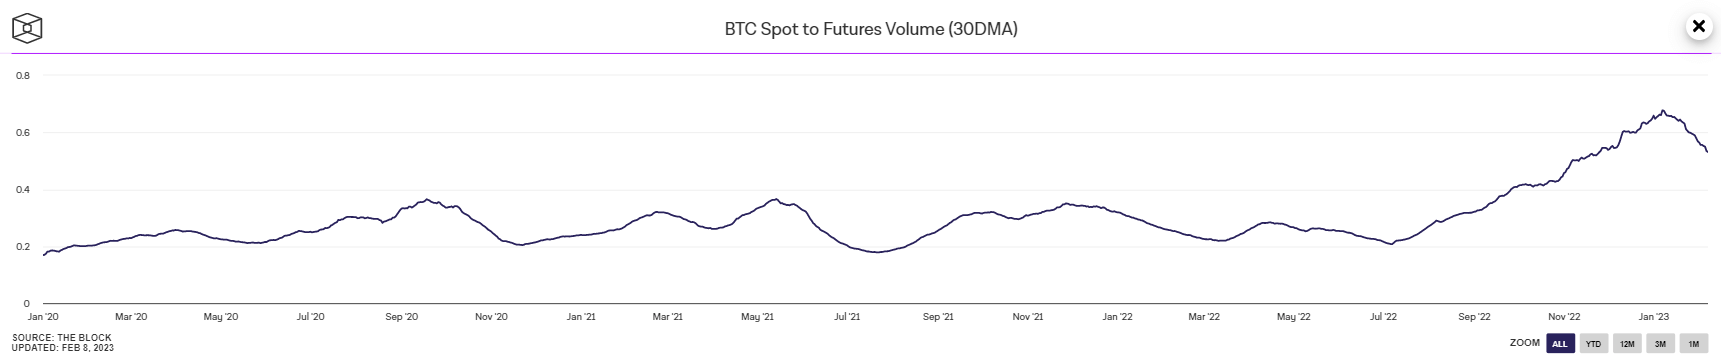 BTC spot to futures volume: (Source: The Block)